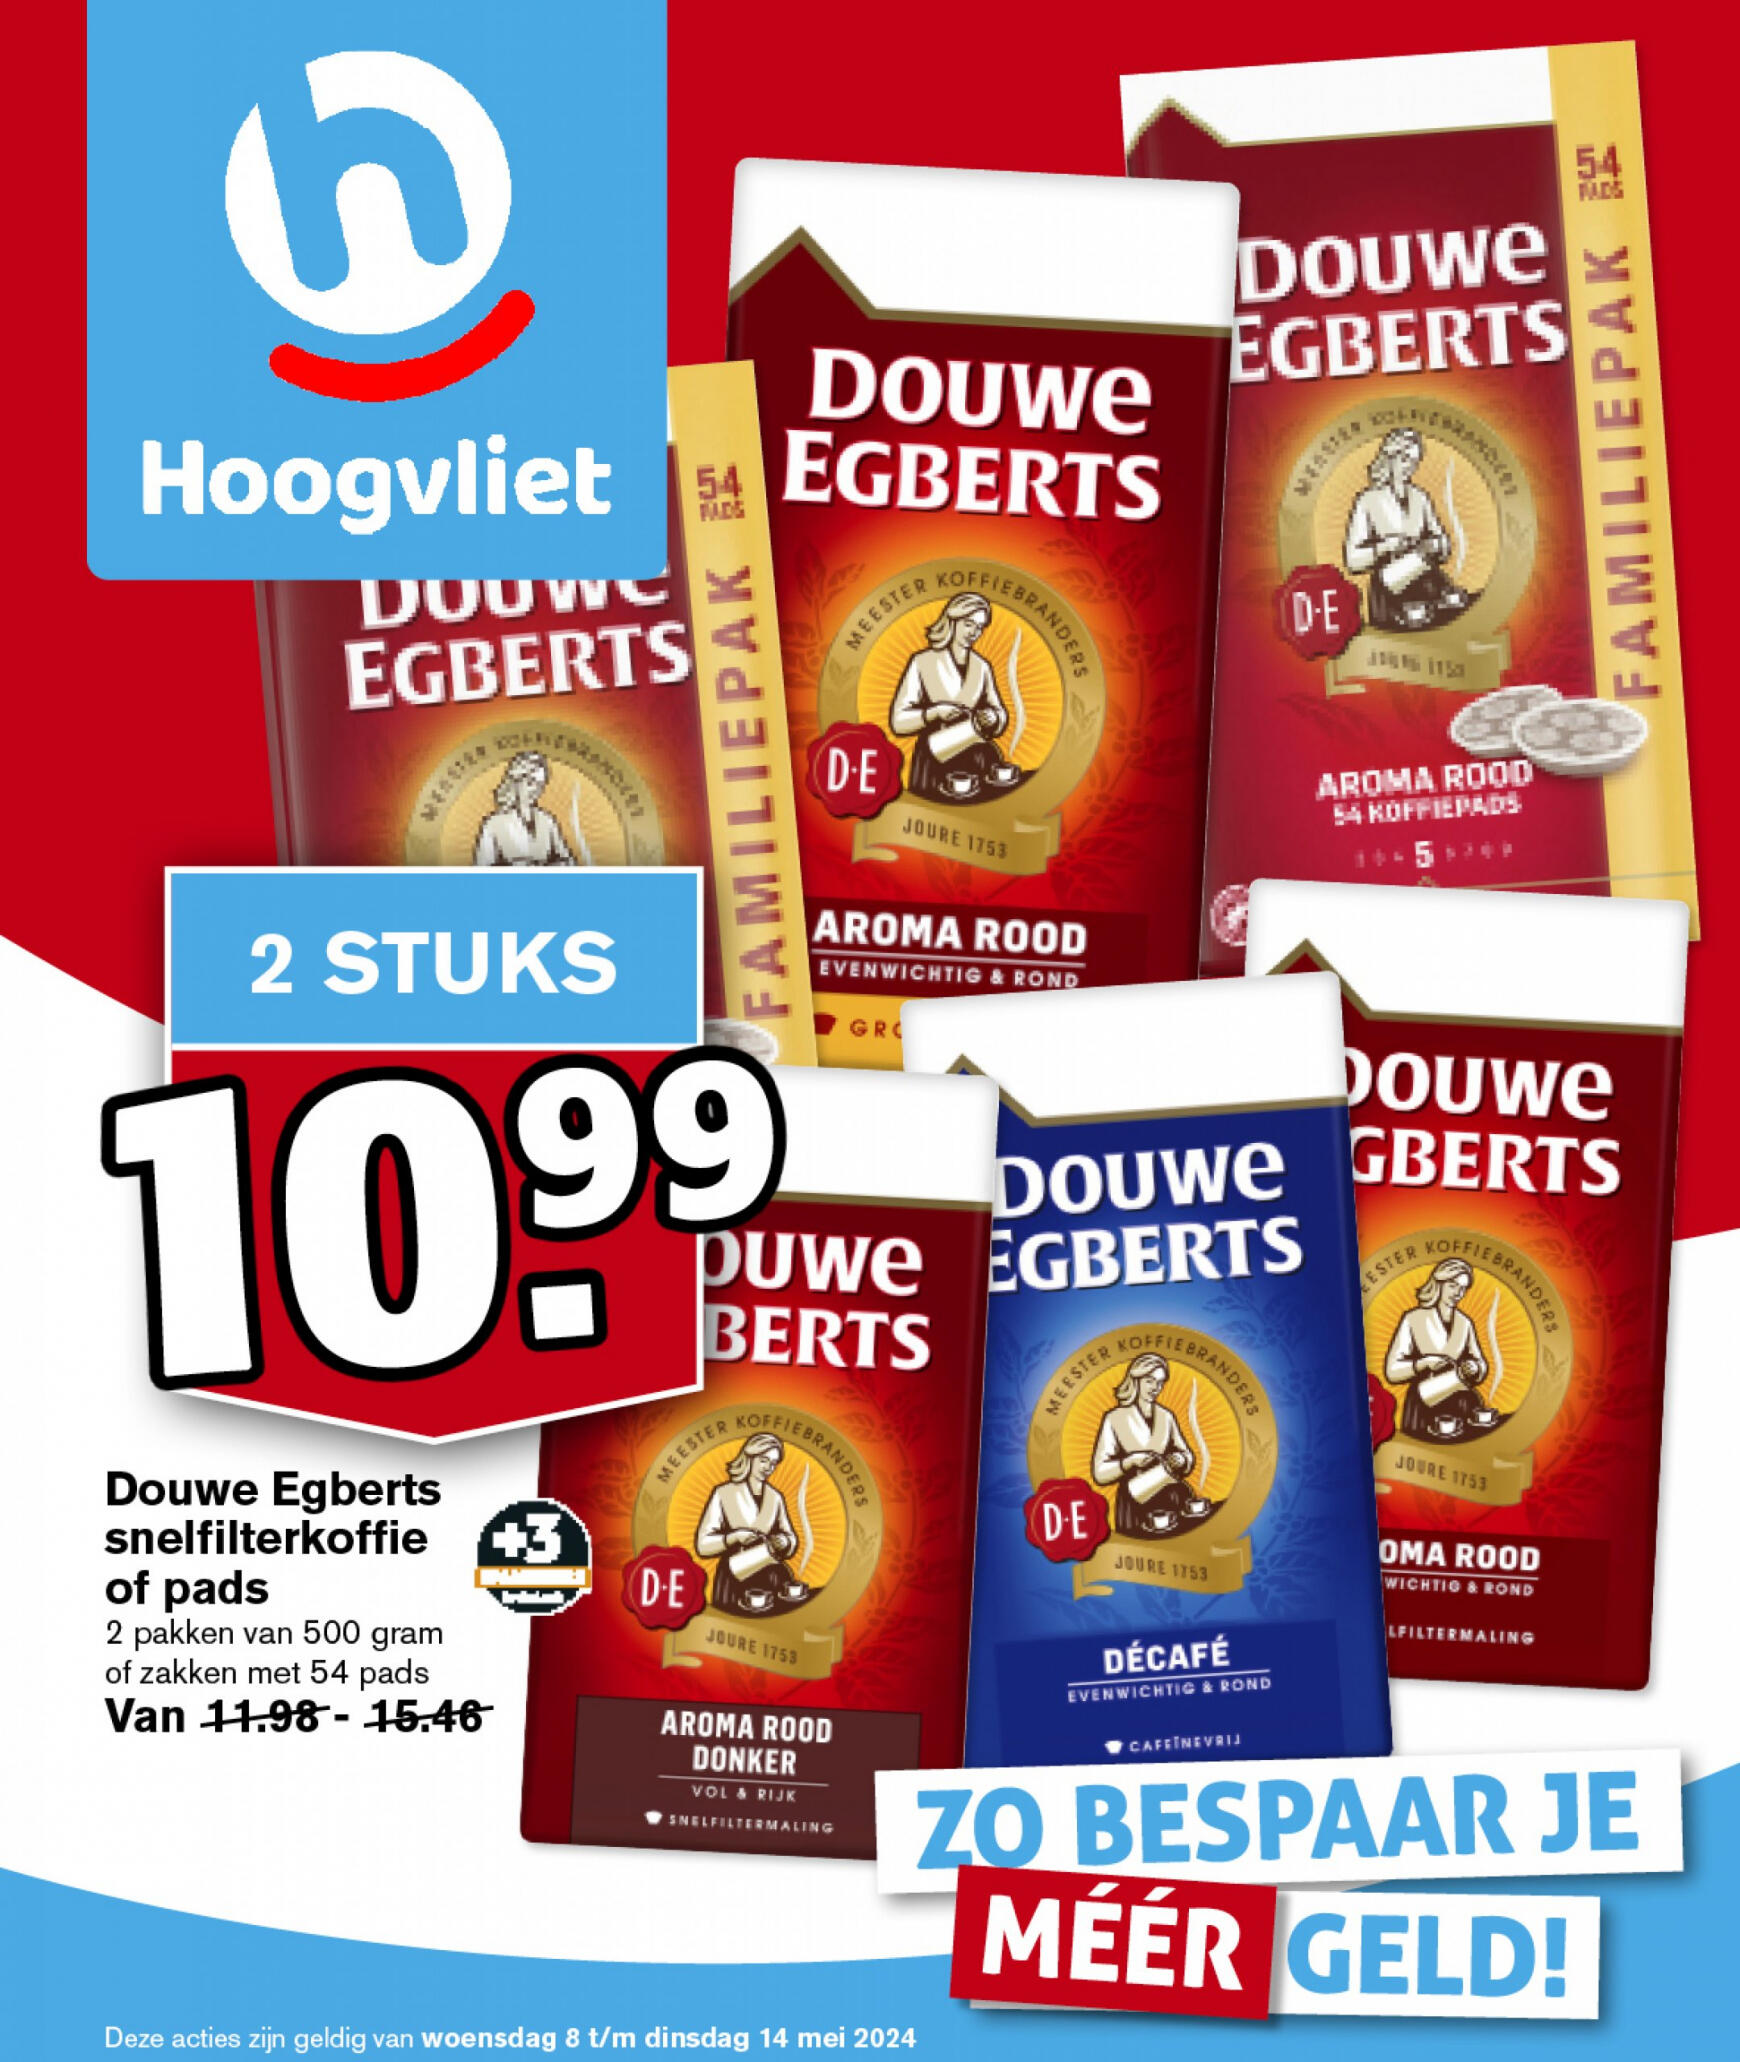 hoogvliet - Hoogvliet folder huidig 08.05. - 14.05. - page: 1